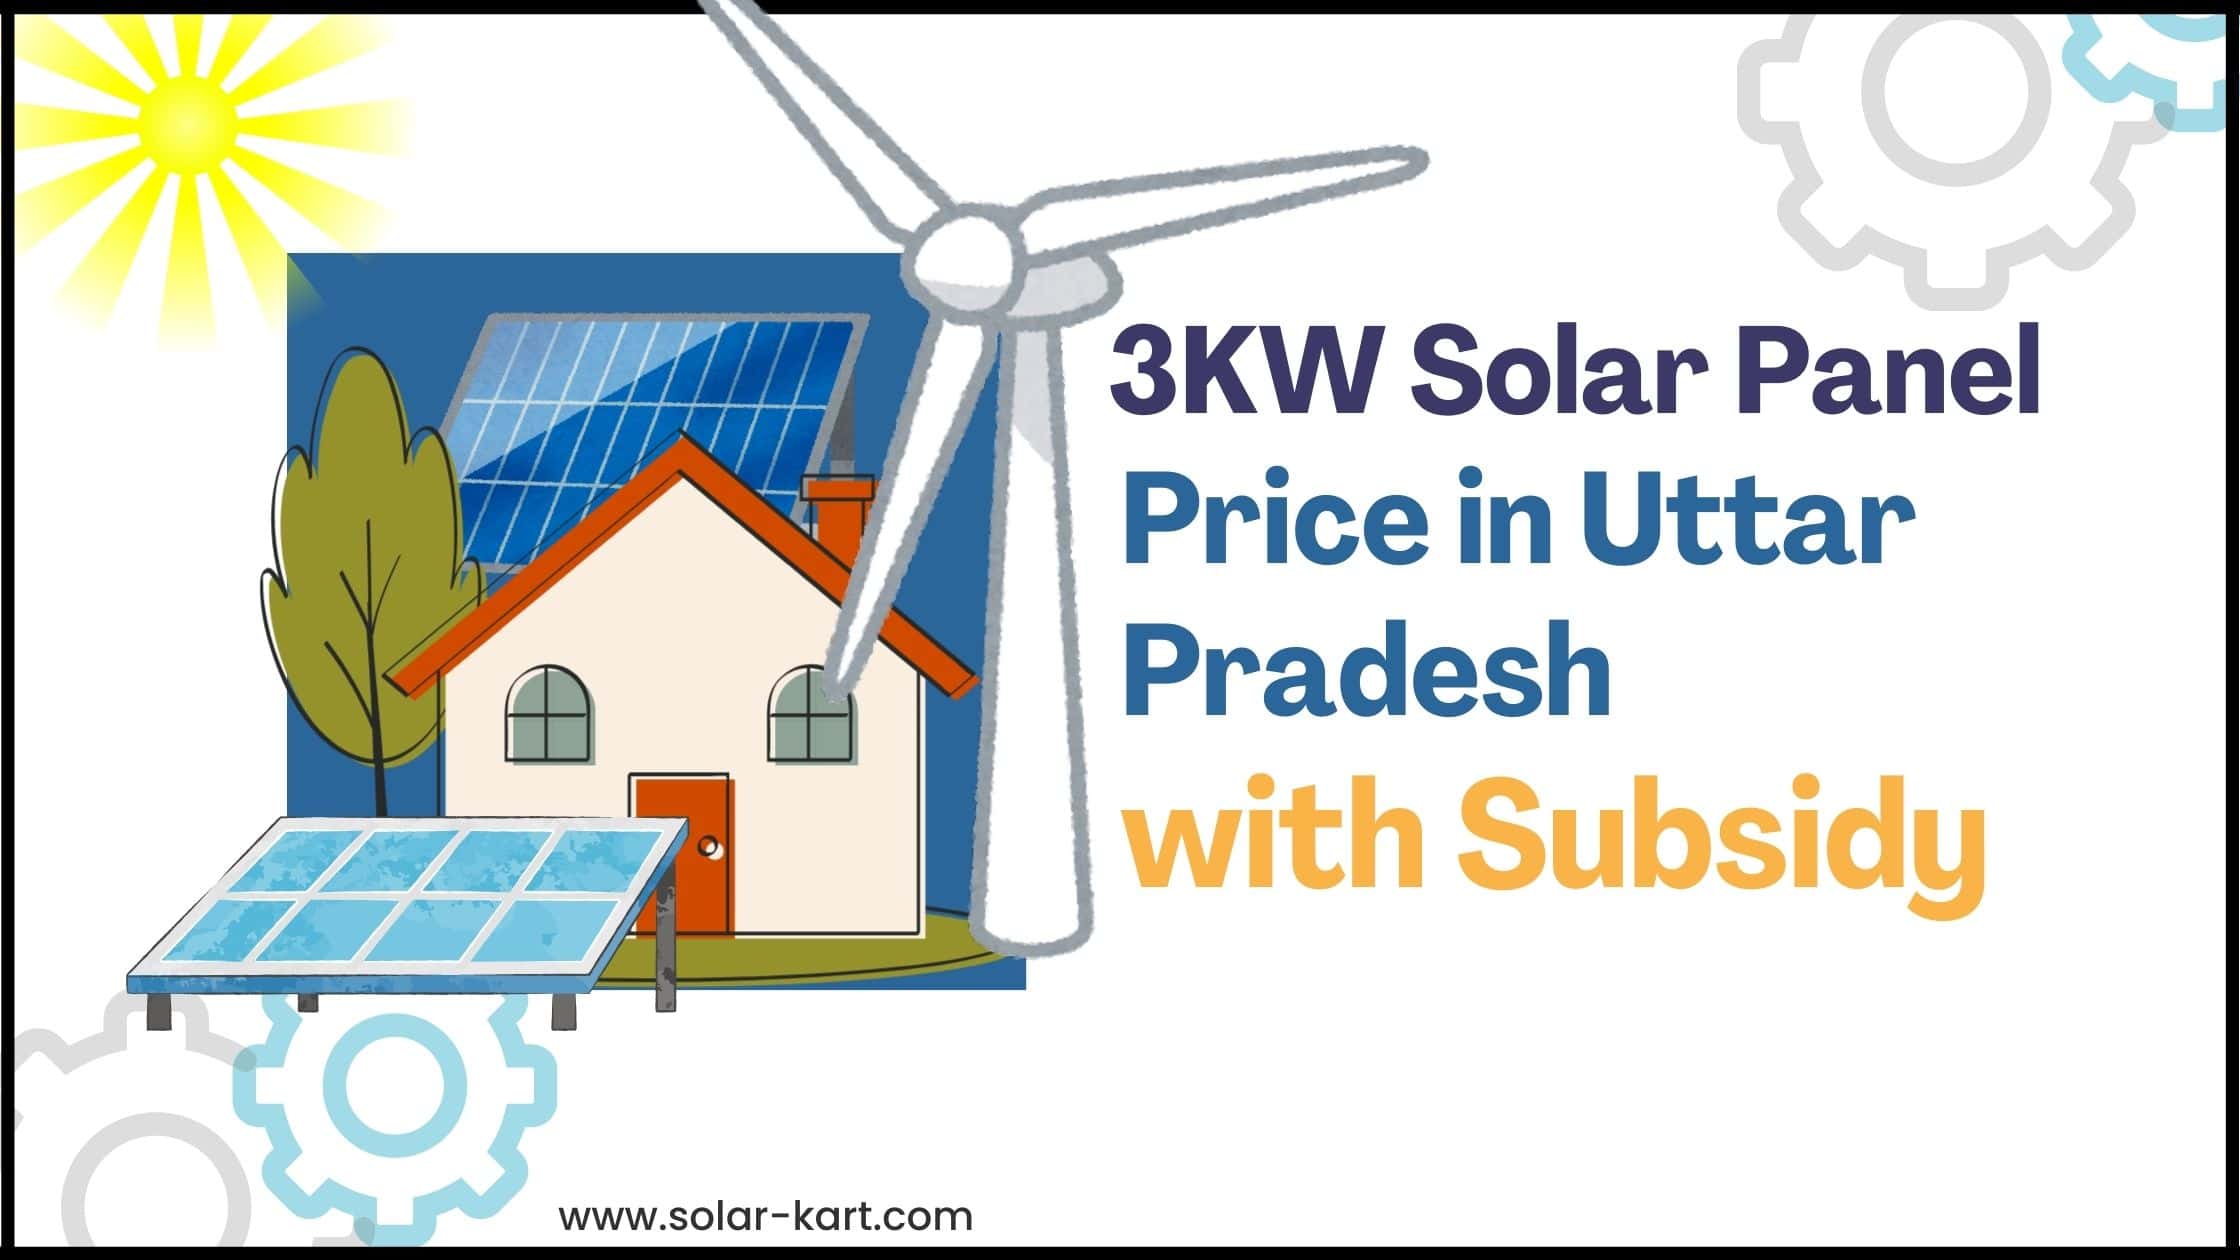 3kW Solar Panel Price in Uttar Pradesh with Subsidy